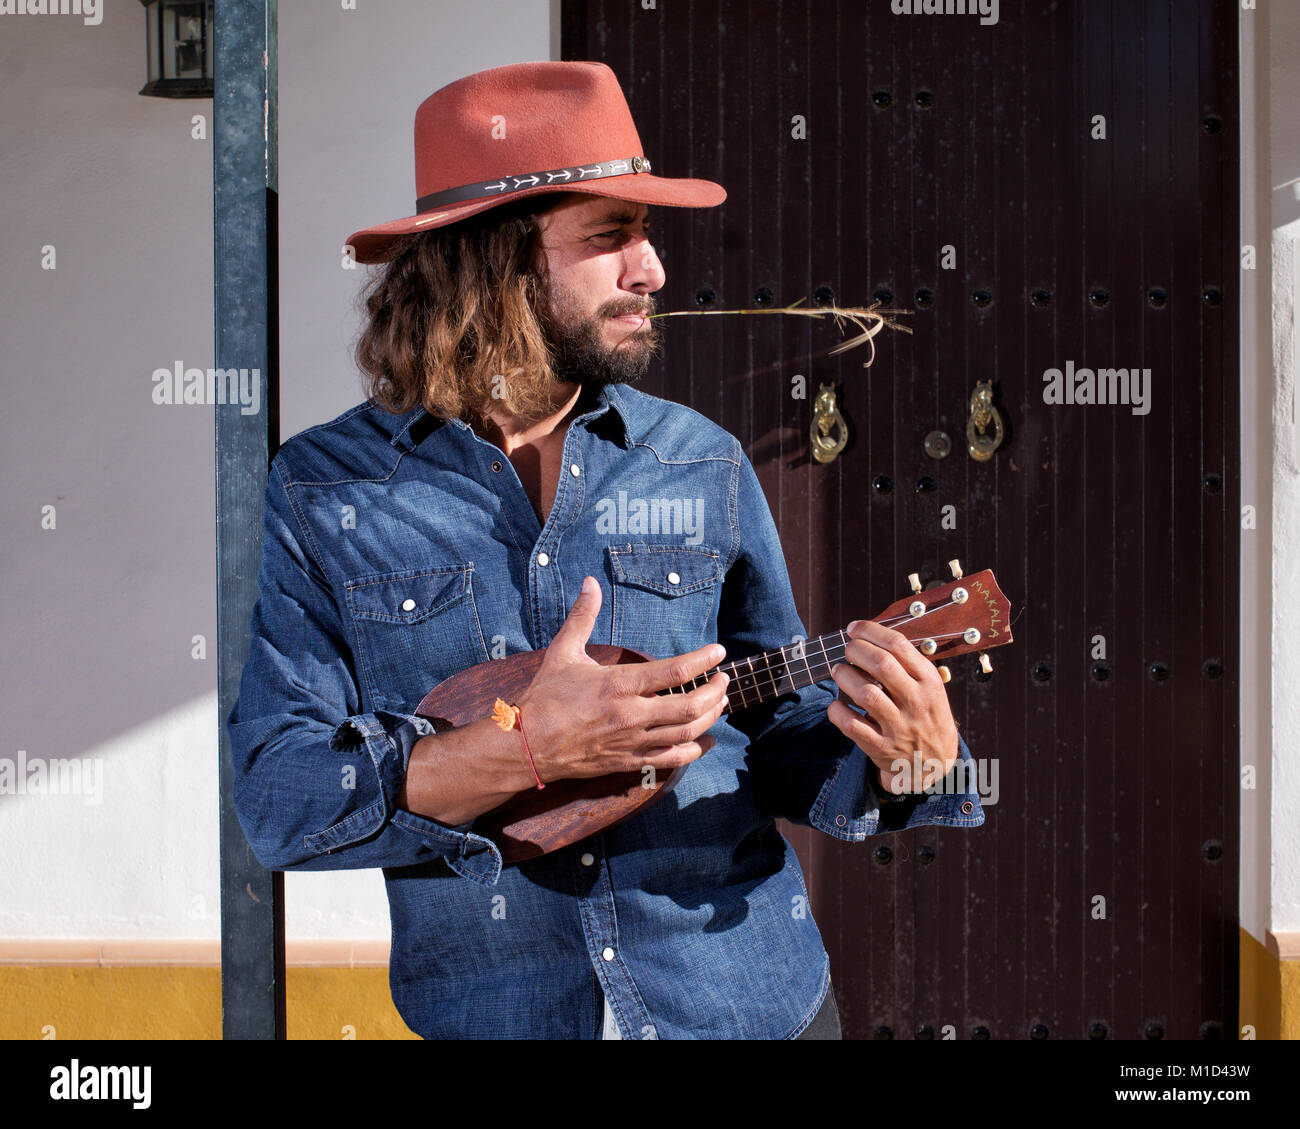 Man leaning against a post playing ukulele Stock Photo